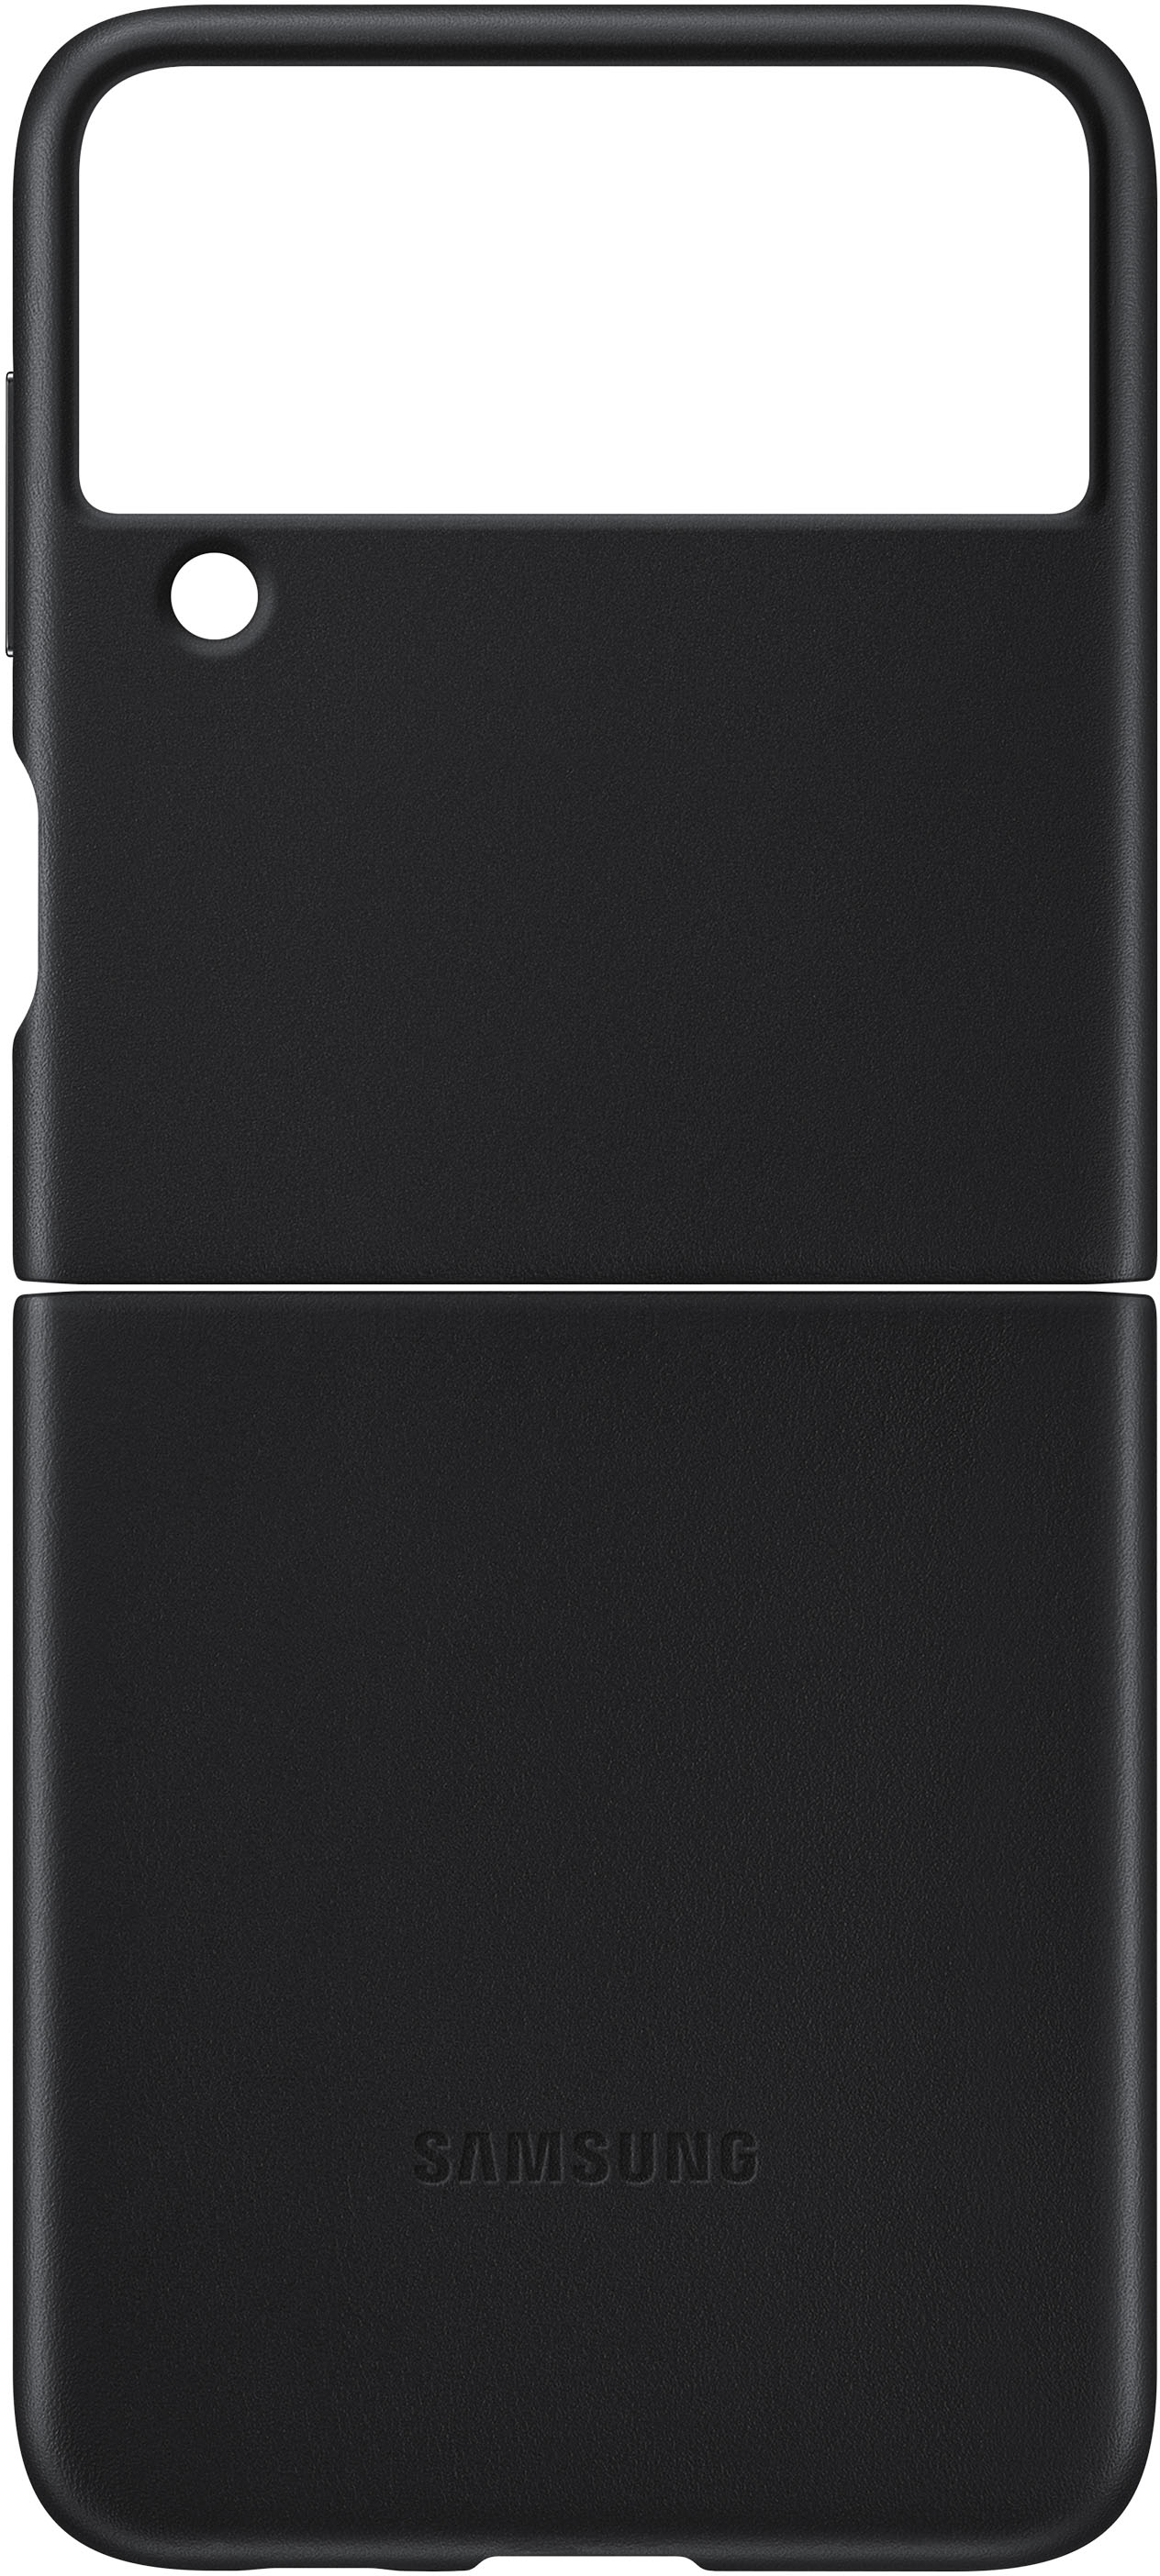 Flip Leather Cover Case for Samsung Galaxy Z Flip Black EF-VF700LBEGUS -  Best Buy